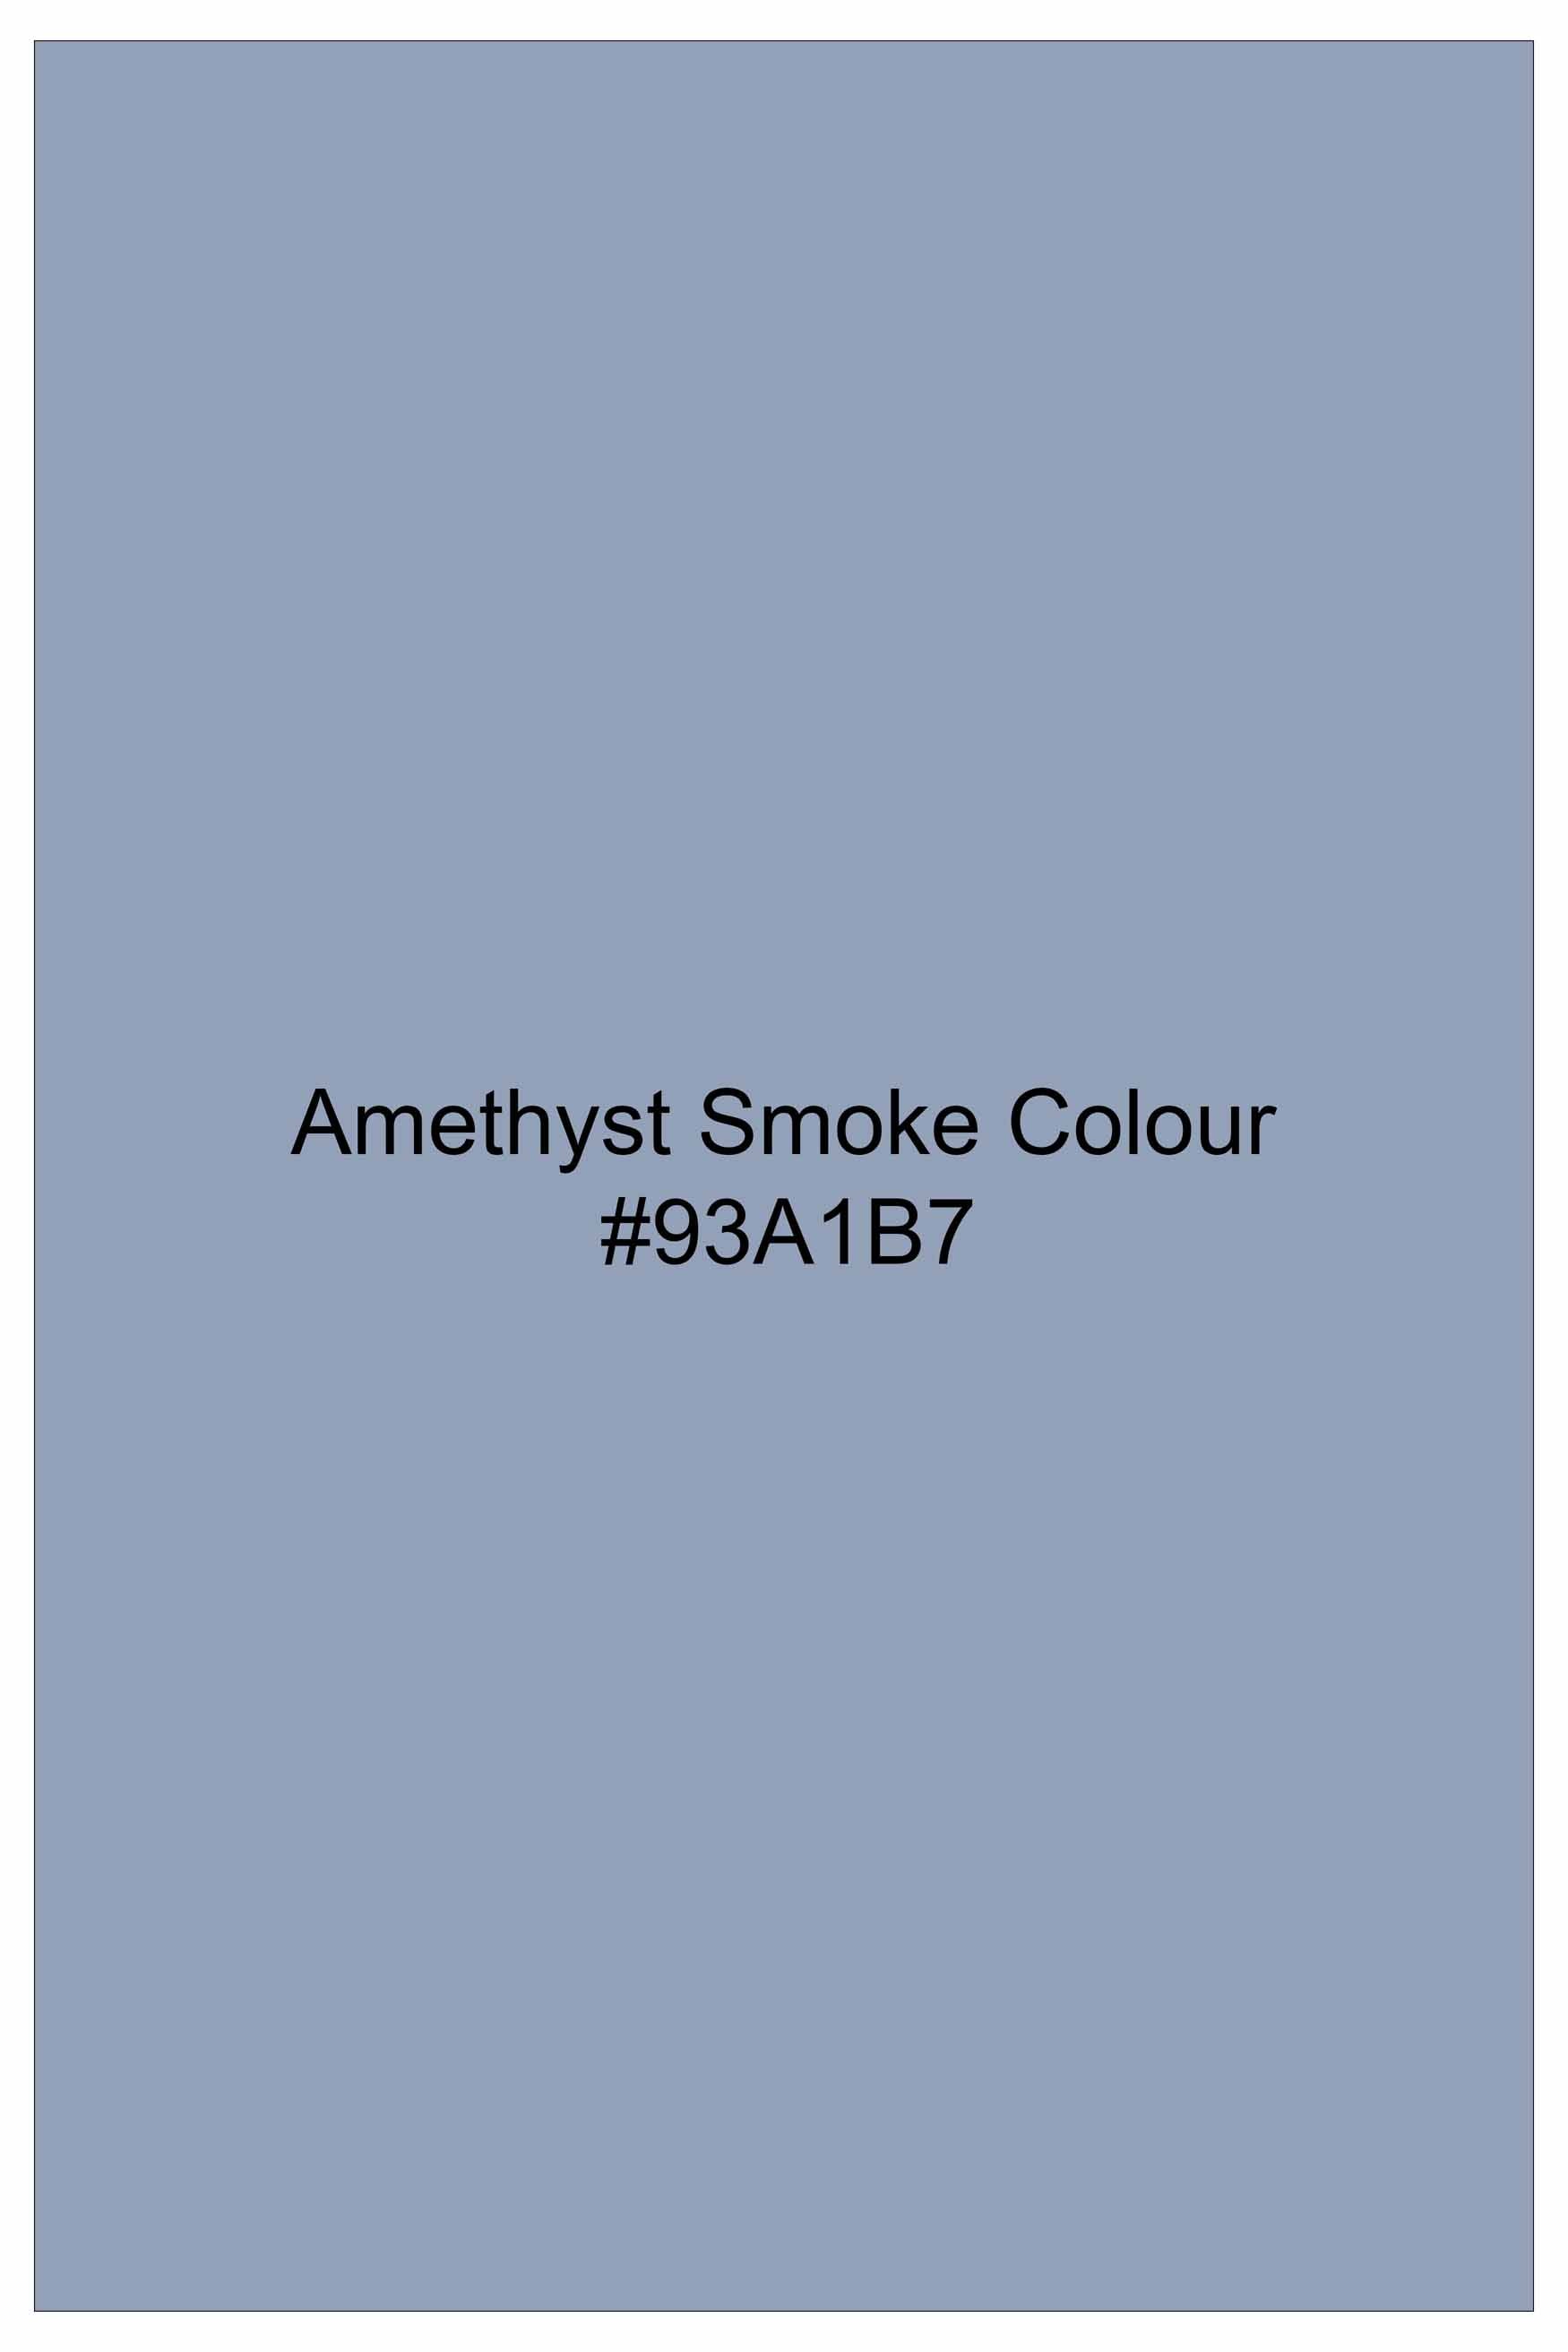 Amethyst Smoke Hand Painted Royal Oxford Designer Shirt 6755-BD-ART01-38, 6755-BD-ART01-H-38, 6755-BD-ART01-39, 6755-BD-ART01-H-39, 6755-BD-ART01-40, 6755-BD-ART01-H-40, 6755-BD-ART01-42, 6755-BD-ART01-H-42, 6755-BD-ART01-44, 6755-BD-ART01-H-44, 6755-BD-ART01-46, 6755-BD-ART01-H-46, 6755-BD-ART01-48, 6755-BD-ART01-H-48, 6755-BD-ART01-50, 6755-BD-ART01-H-50, 6755-BD-ART01-52, 6755-BD-ART01-H-52